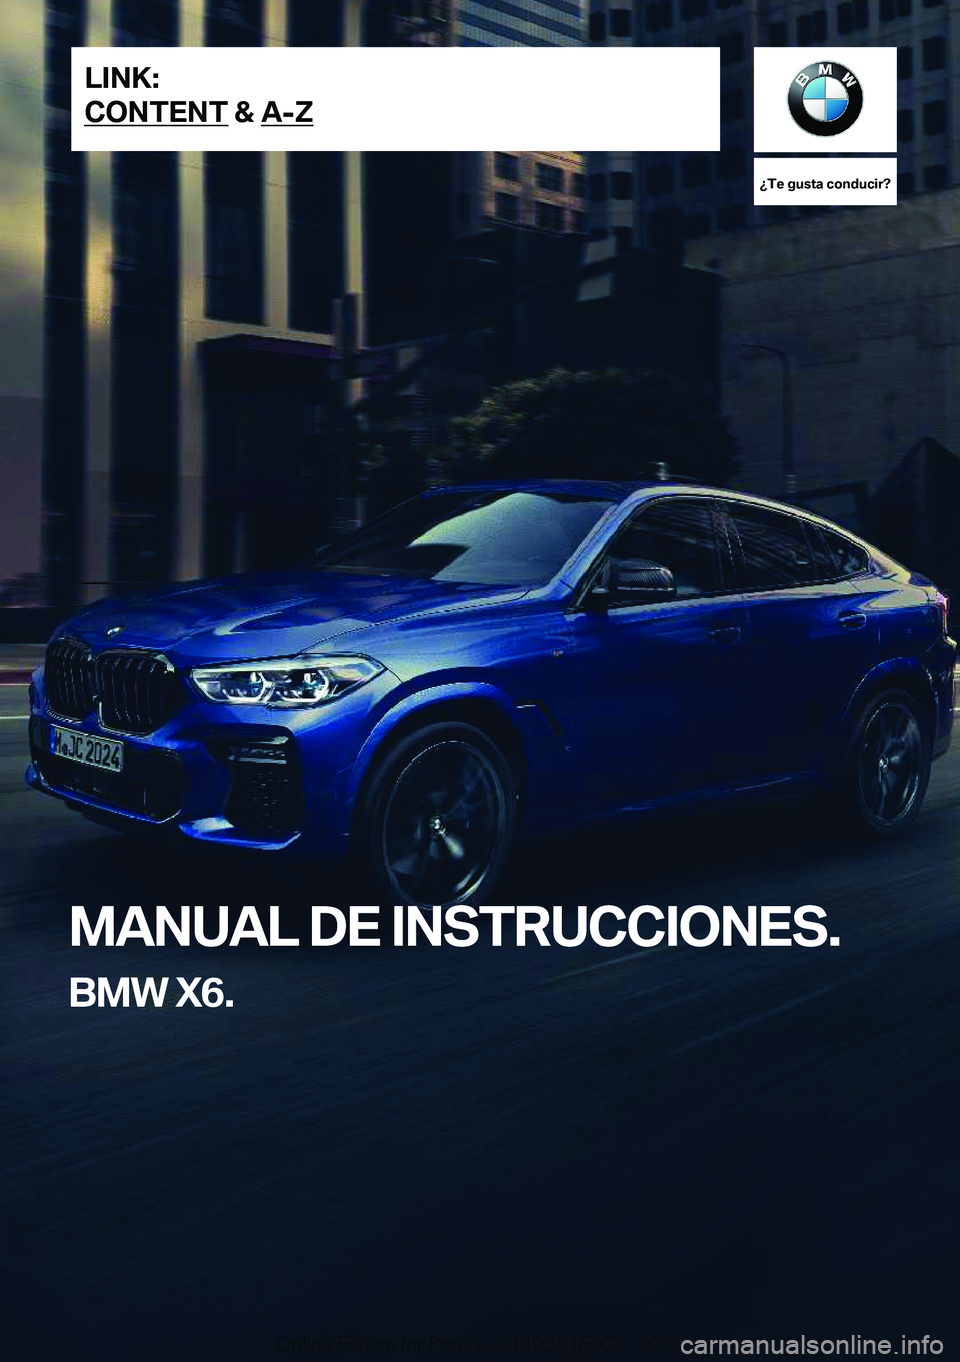 BMW X6 2021  Manuales de Empleo (in Spanish) ��T�e��g�u�s�t�a��c�o�n�d�u�c�i�r� 
�M�A�N�U�A�L��D�E��I�N�S�T�R�U�C�C�I�O�N�E�S�.
�B�M�W��X�6�.�L�I�N�K�:
�C�O�N�T�E�N�T��&��A�-�Z�O�n�l�i�n�e��E�d�i�t�i�o�n��f�o�r��P�a�r�t��n�o�.��0�1�